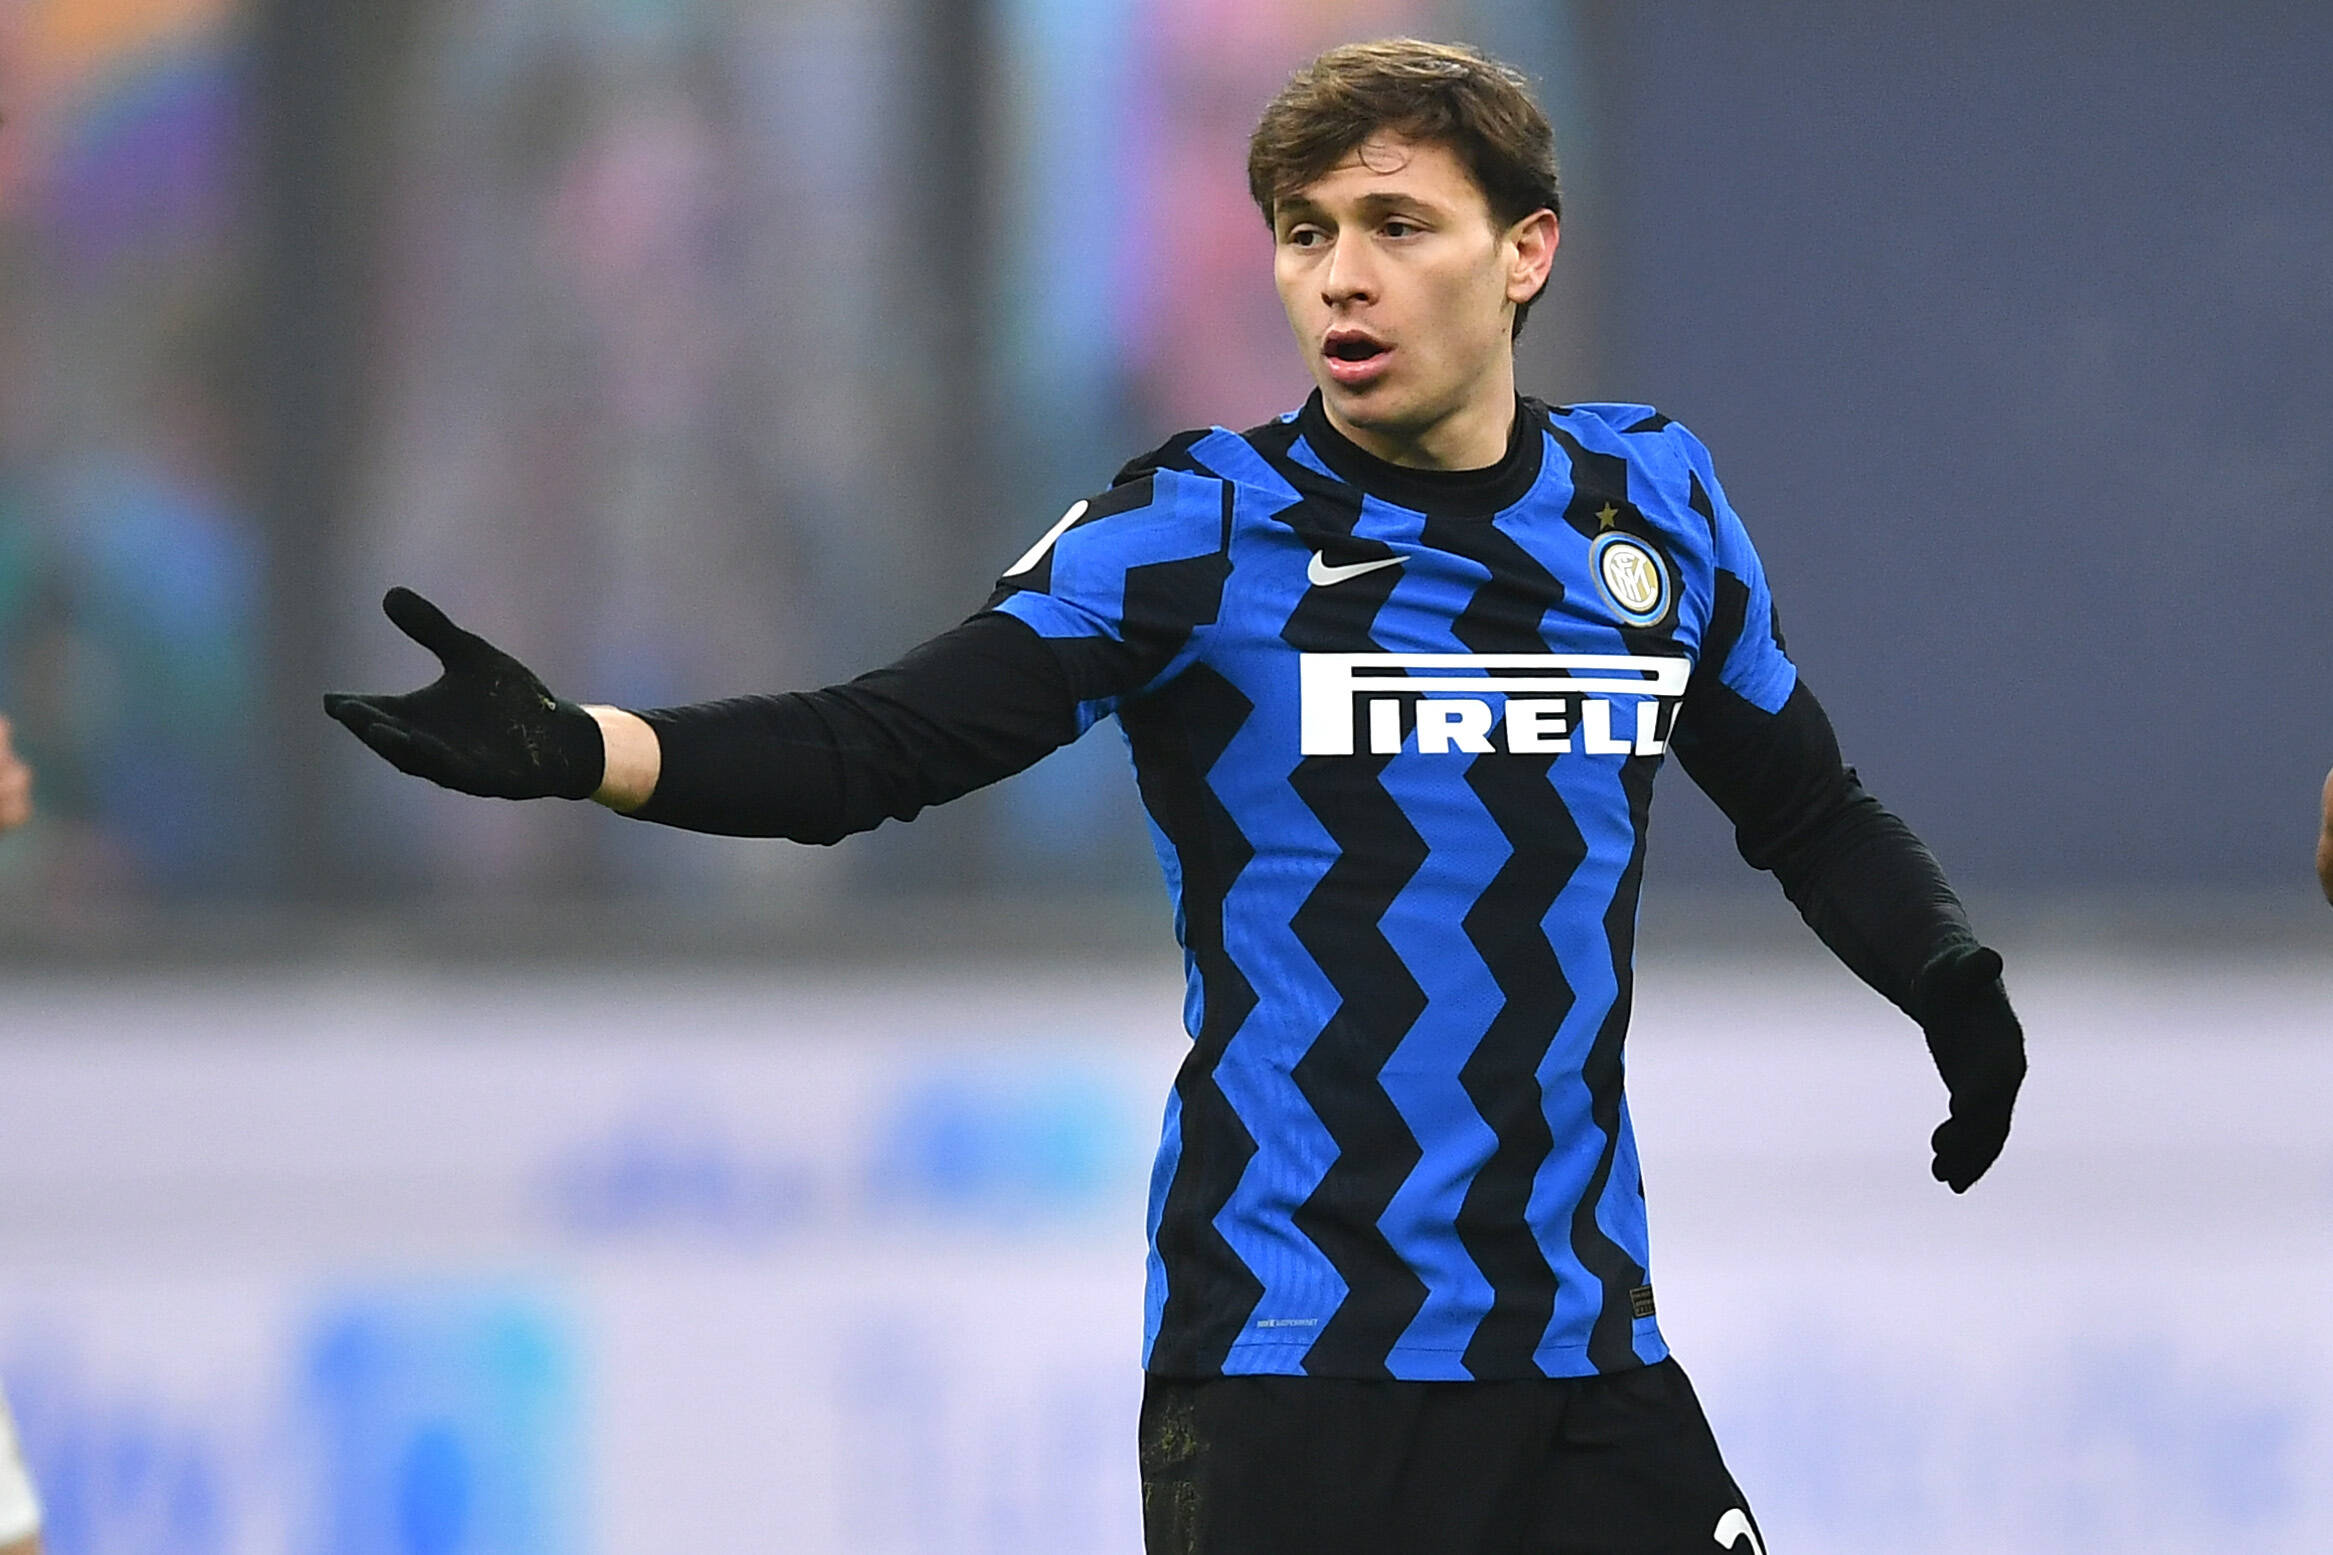 Italian Media Claim Inter Midfielder Nicolo Barella Is Worth €70 million